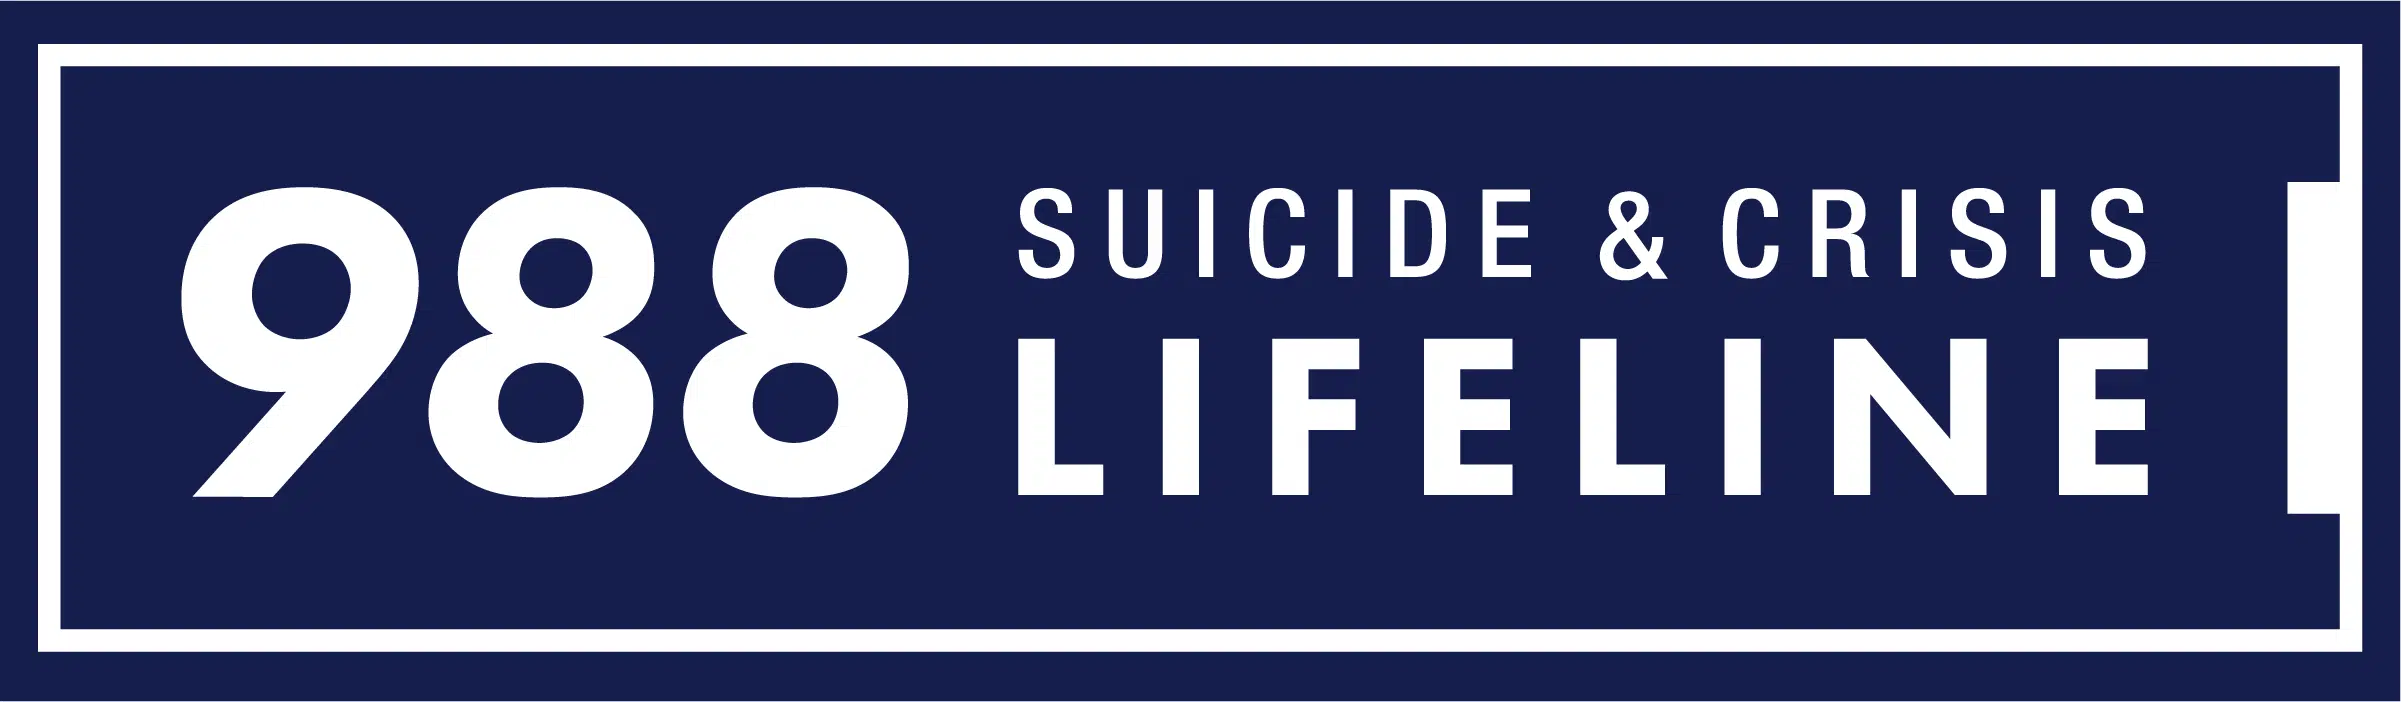 Logo for 988 Suicide & Crisis Lifeline